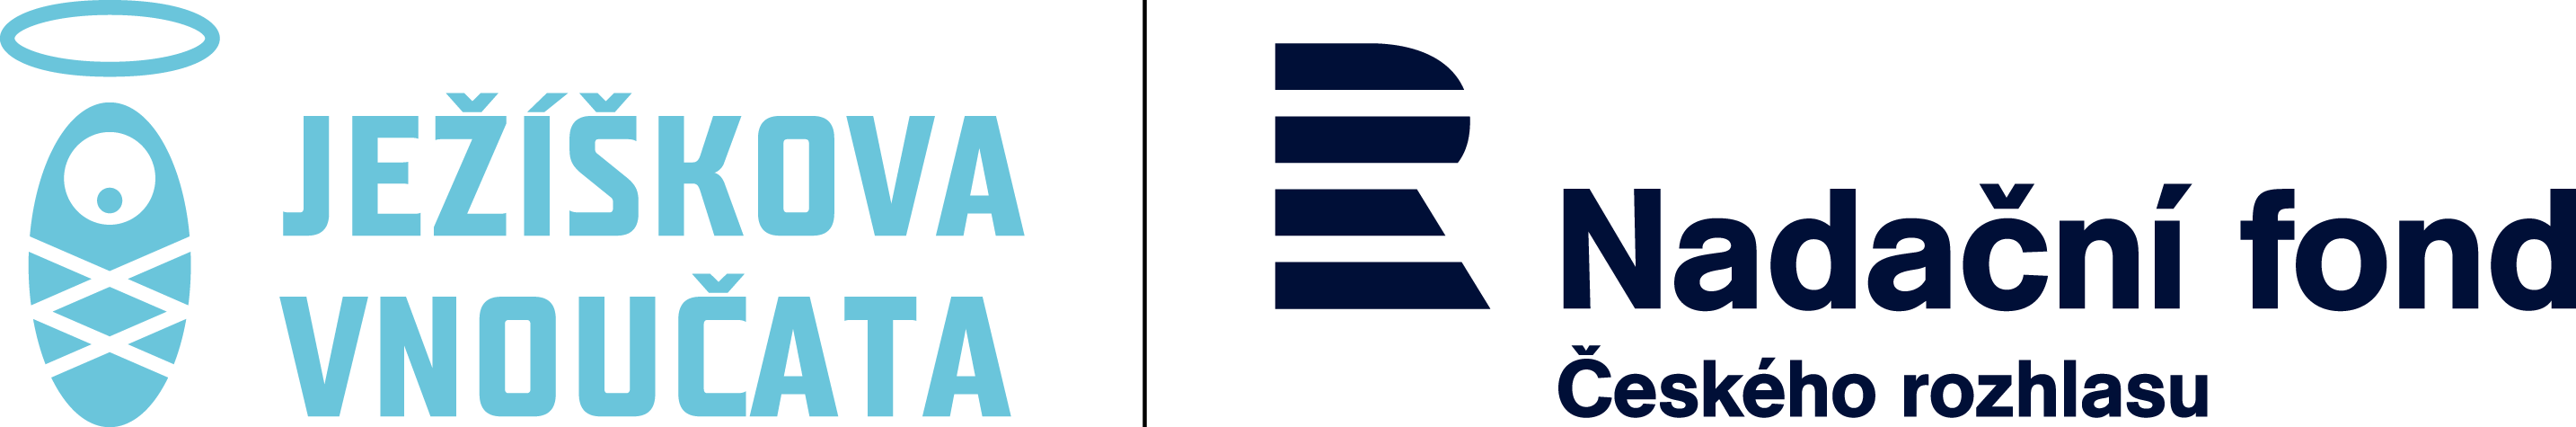 Logo kompozitni Jeziskova vnoucata Nadacni fond RGB